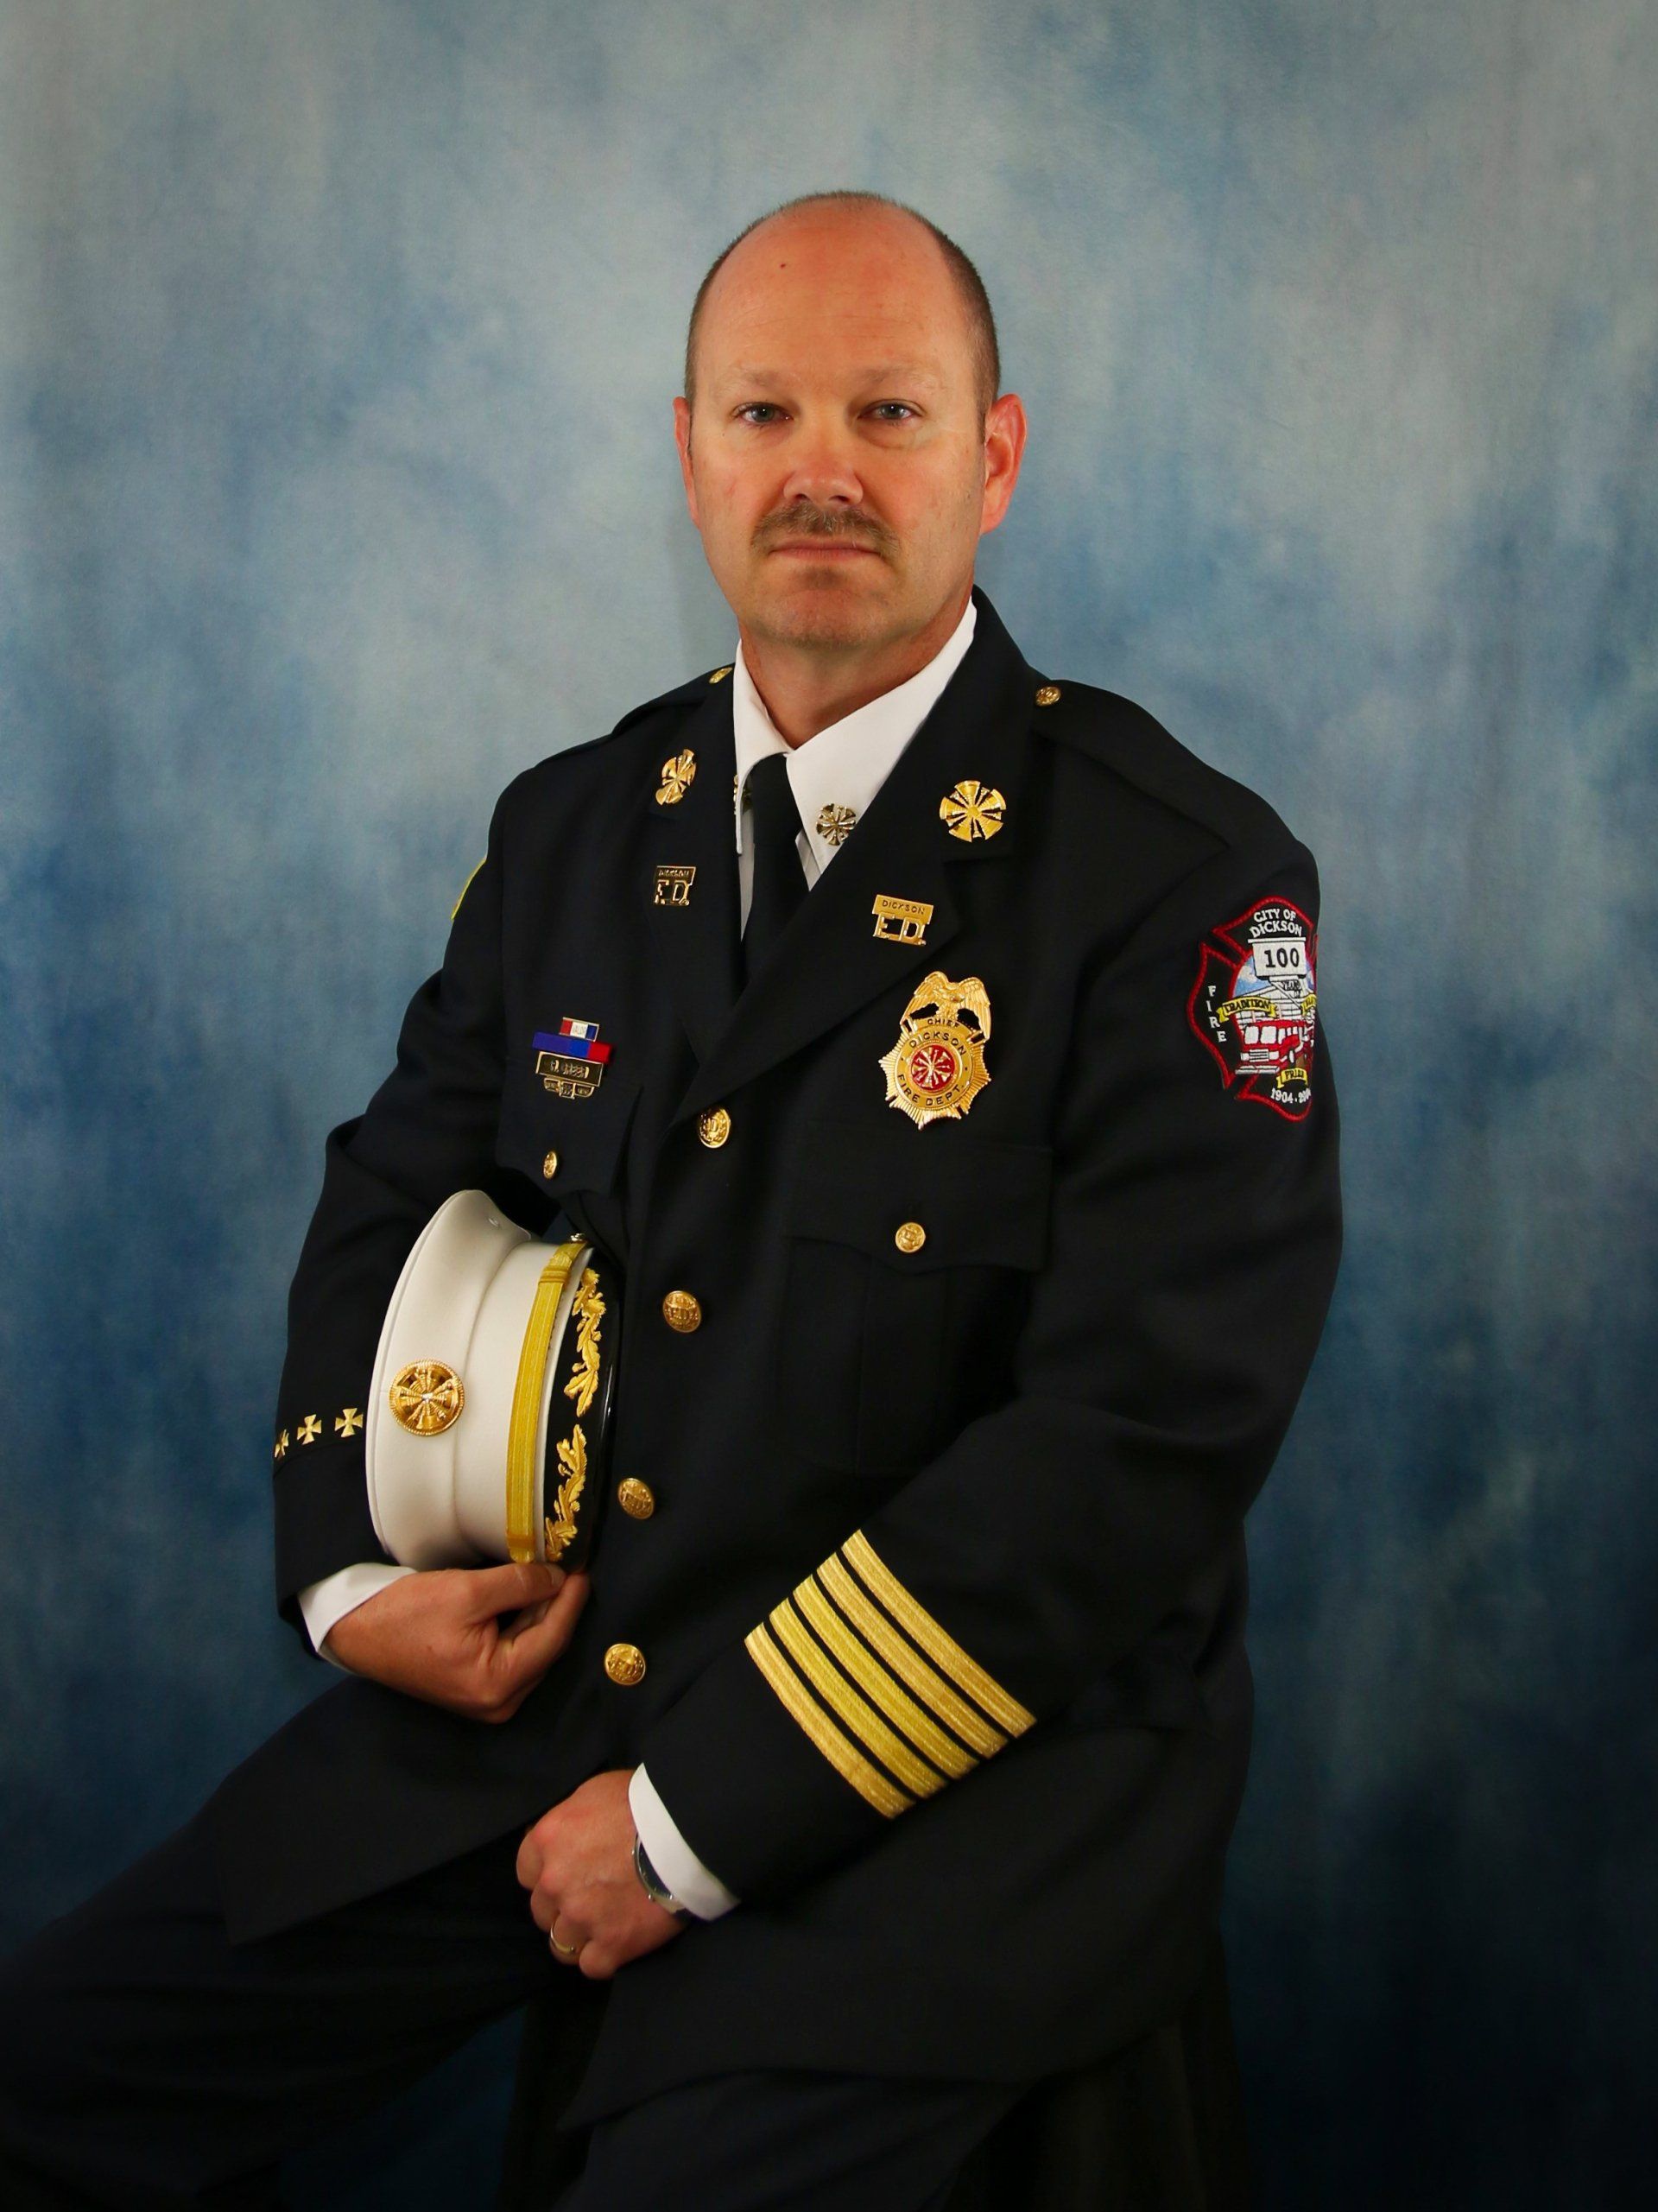 Fire Chief Richard Greer